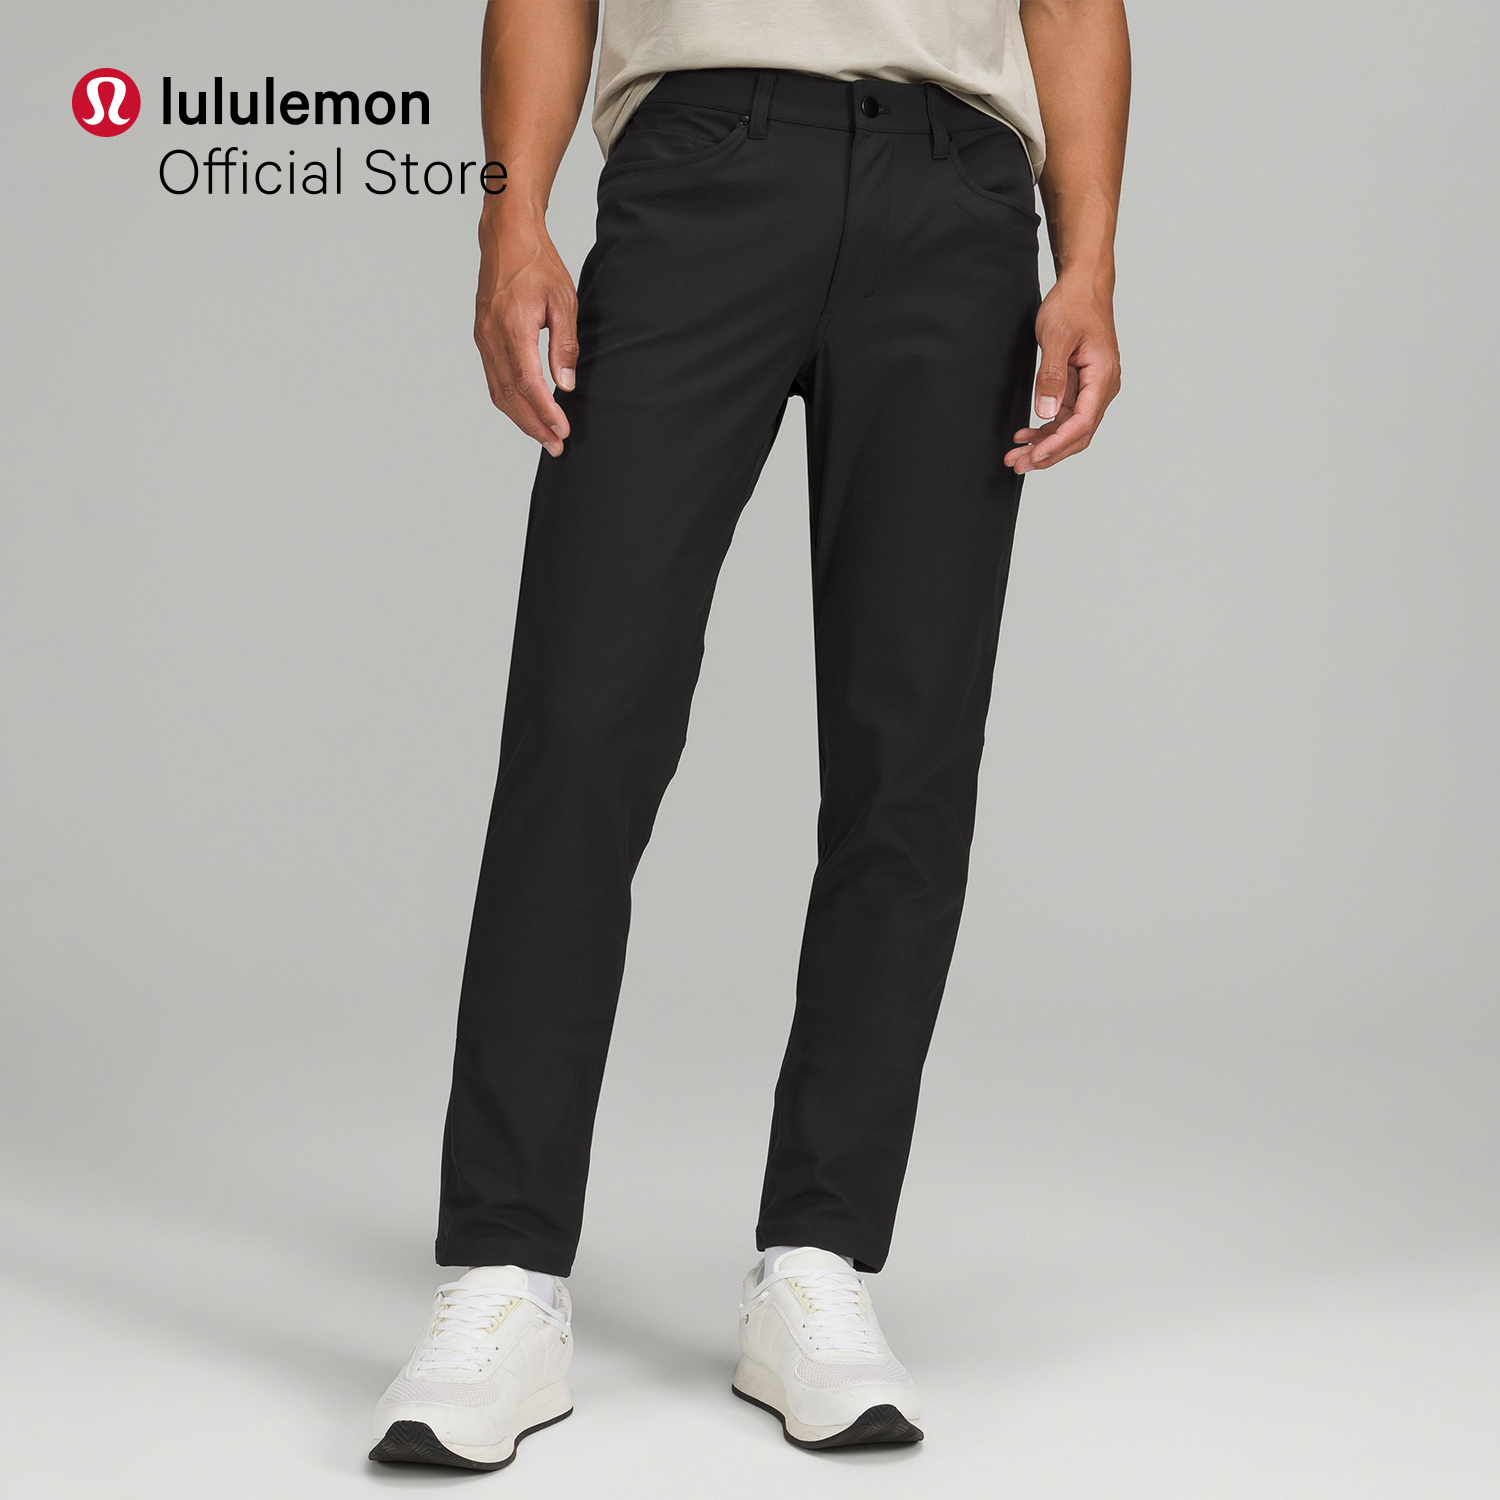 lululemon Men's ABC Slim-Fit Pant 30 - Warpstreme - Online Only